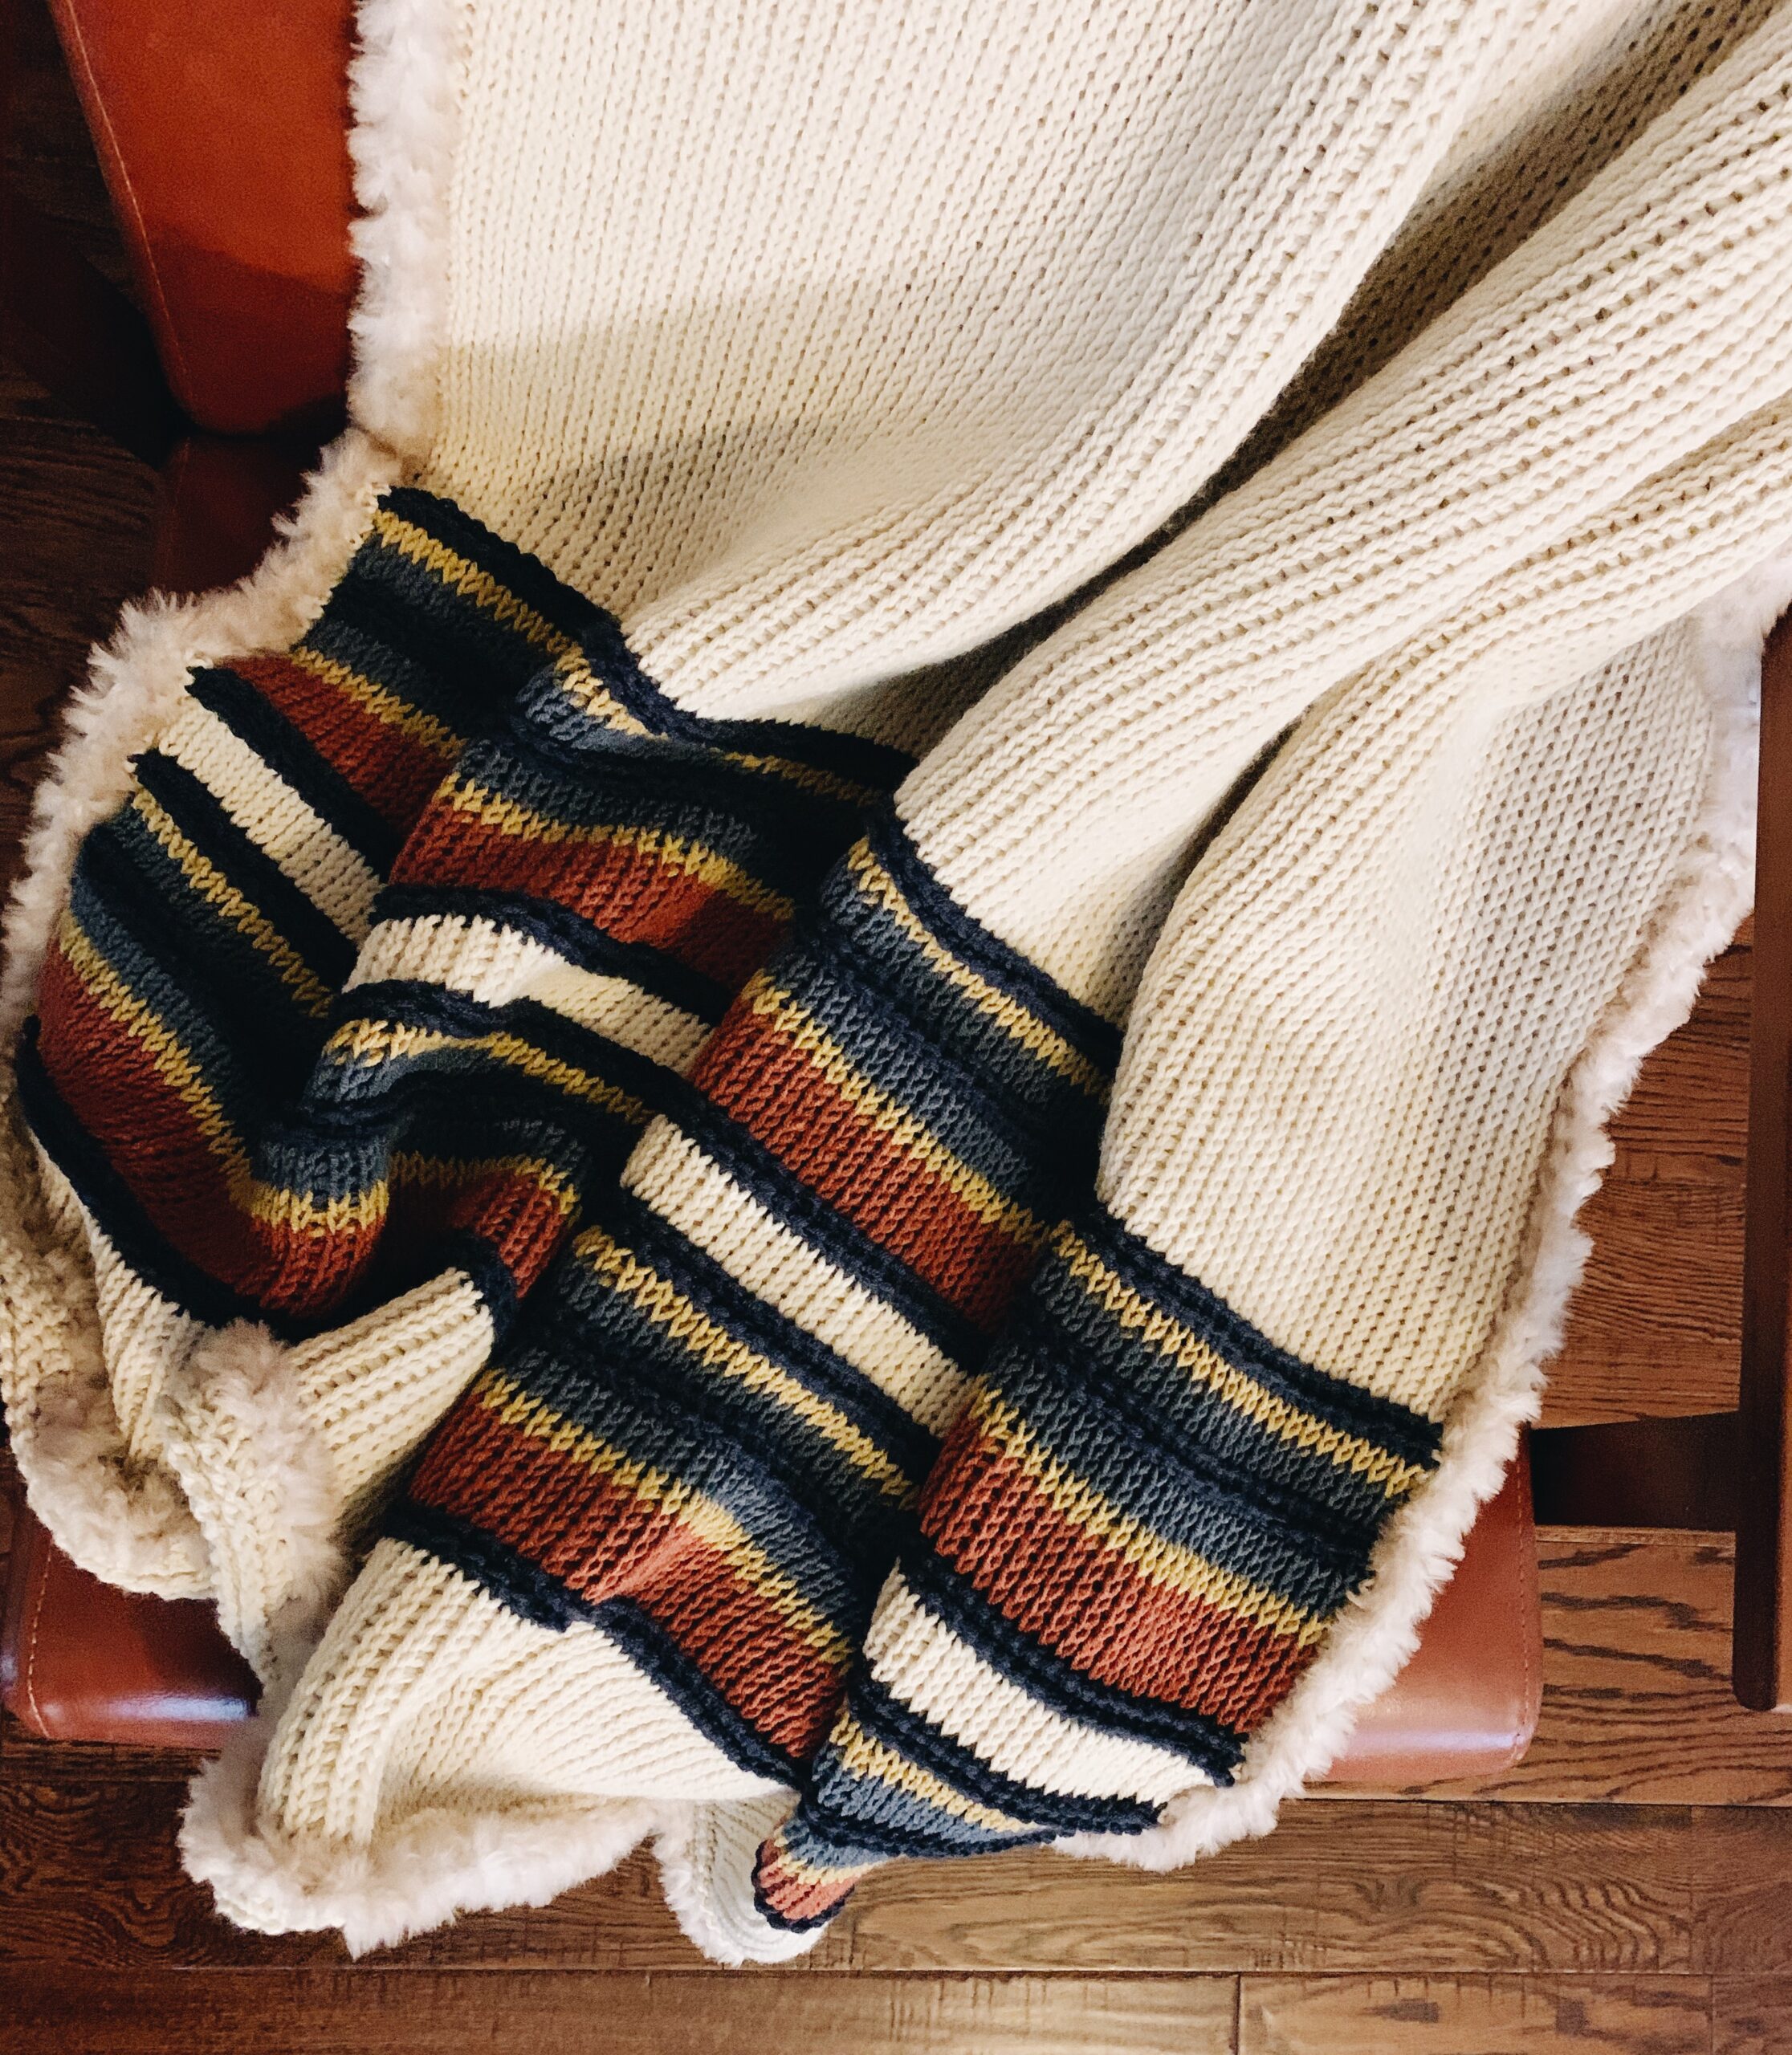 Crochet Pattern Yarn and Colors Amazing Stripey Blanket 